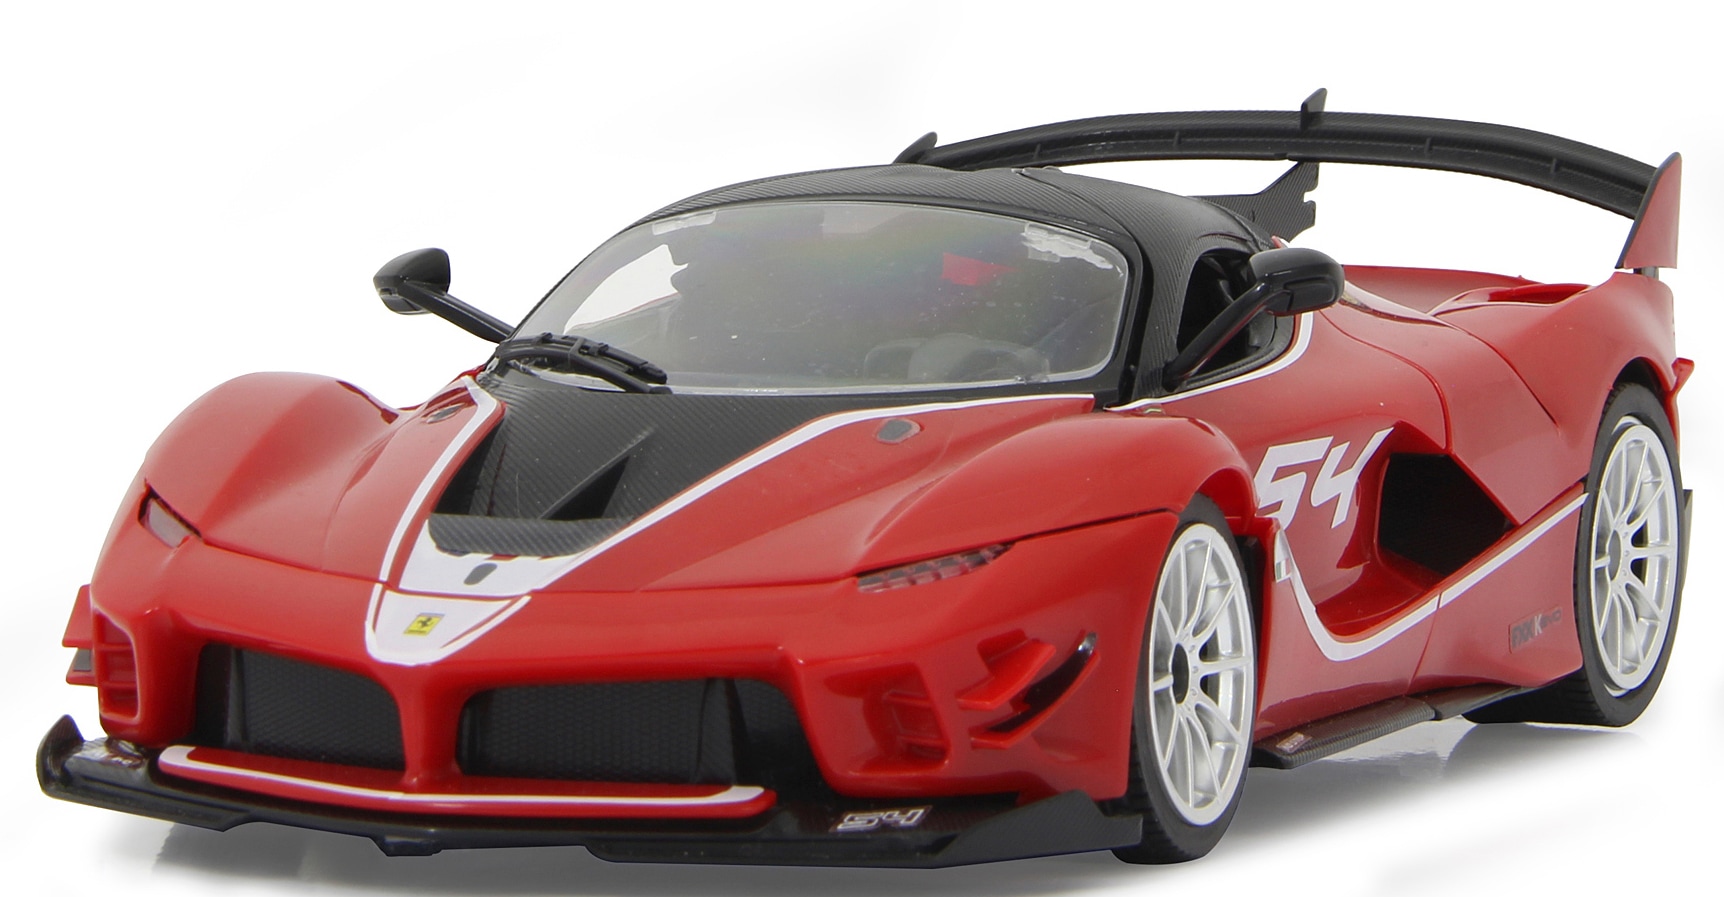 Jamara Modellbausatz »Ferrari FXX K Evo 1:18, rot - 2,4 GHz«, 1:18